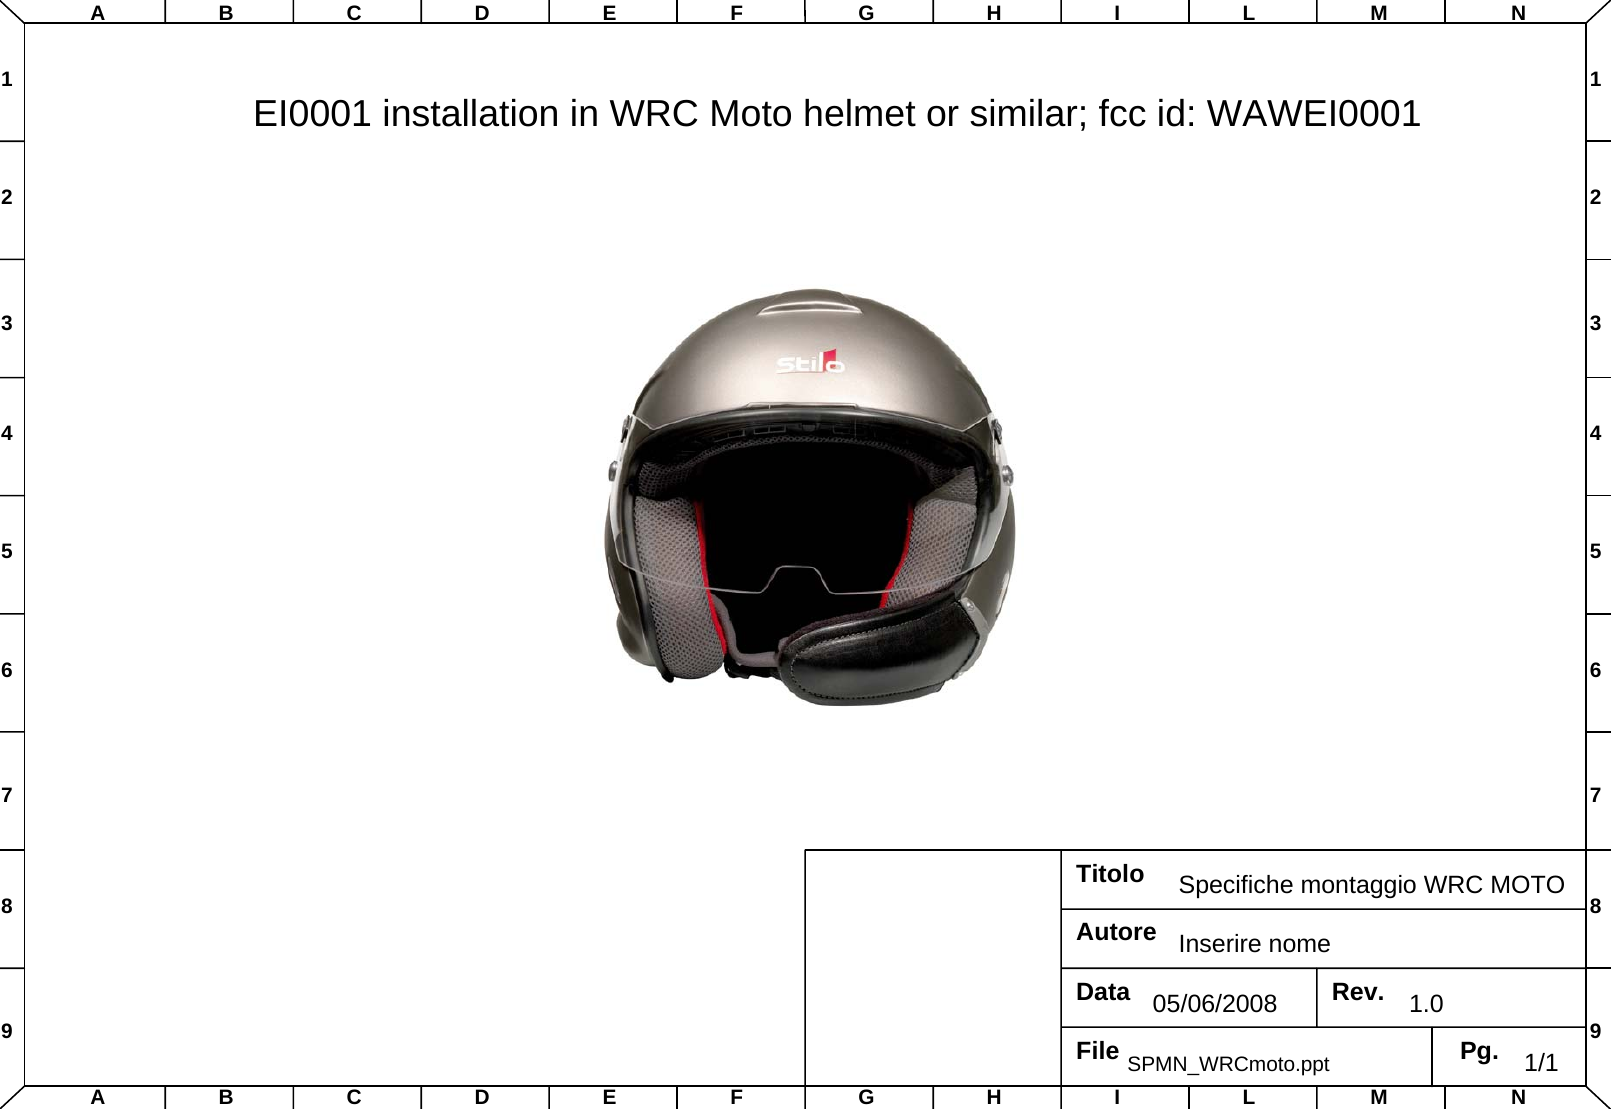 TitoloData Rev.Pg.Specifiche montaggio WRC MOTO05/06/2008 1.01/1File SPMN_WRCmoto.pptAutore Inserire nomeABCDEFGHI LM NABCDEFGHI LM N123456789123456789EI0001 installation in WRC Moto helmet or similar; fcc id: WAWEI0001